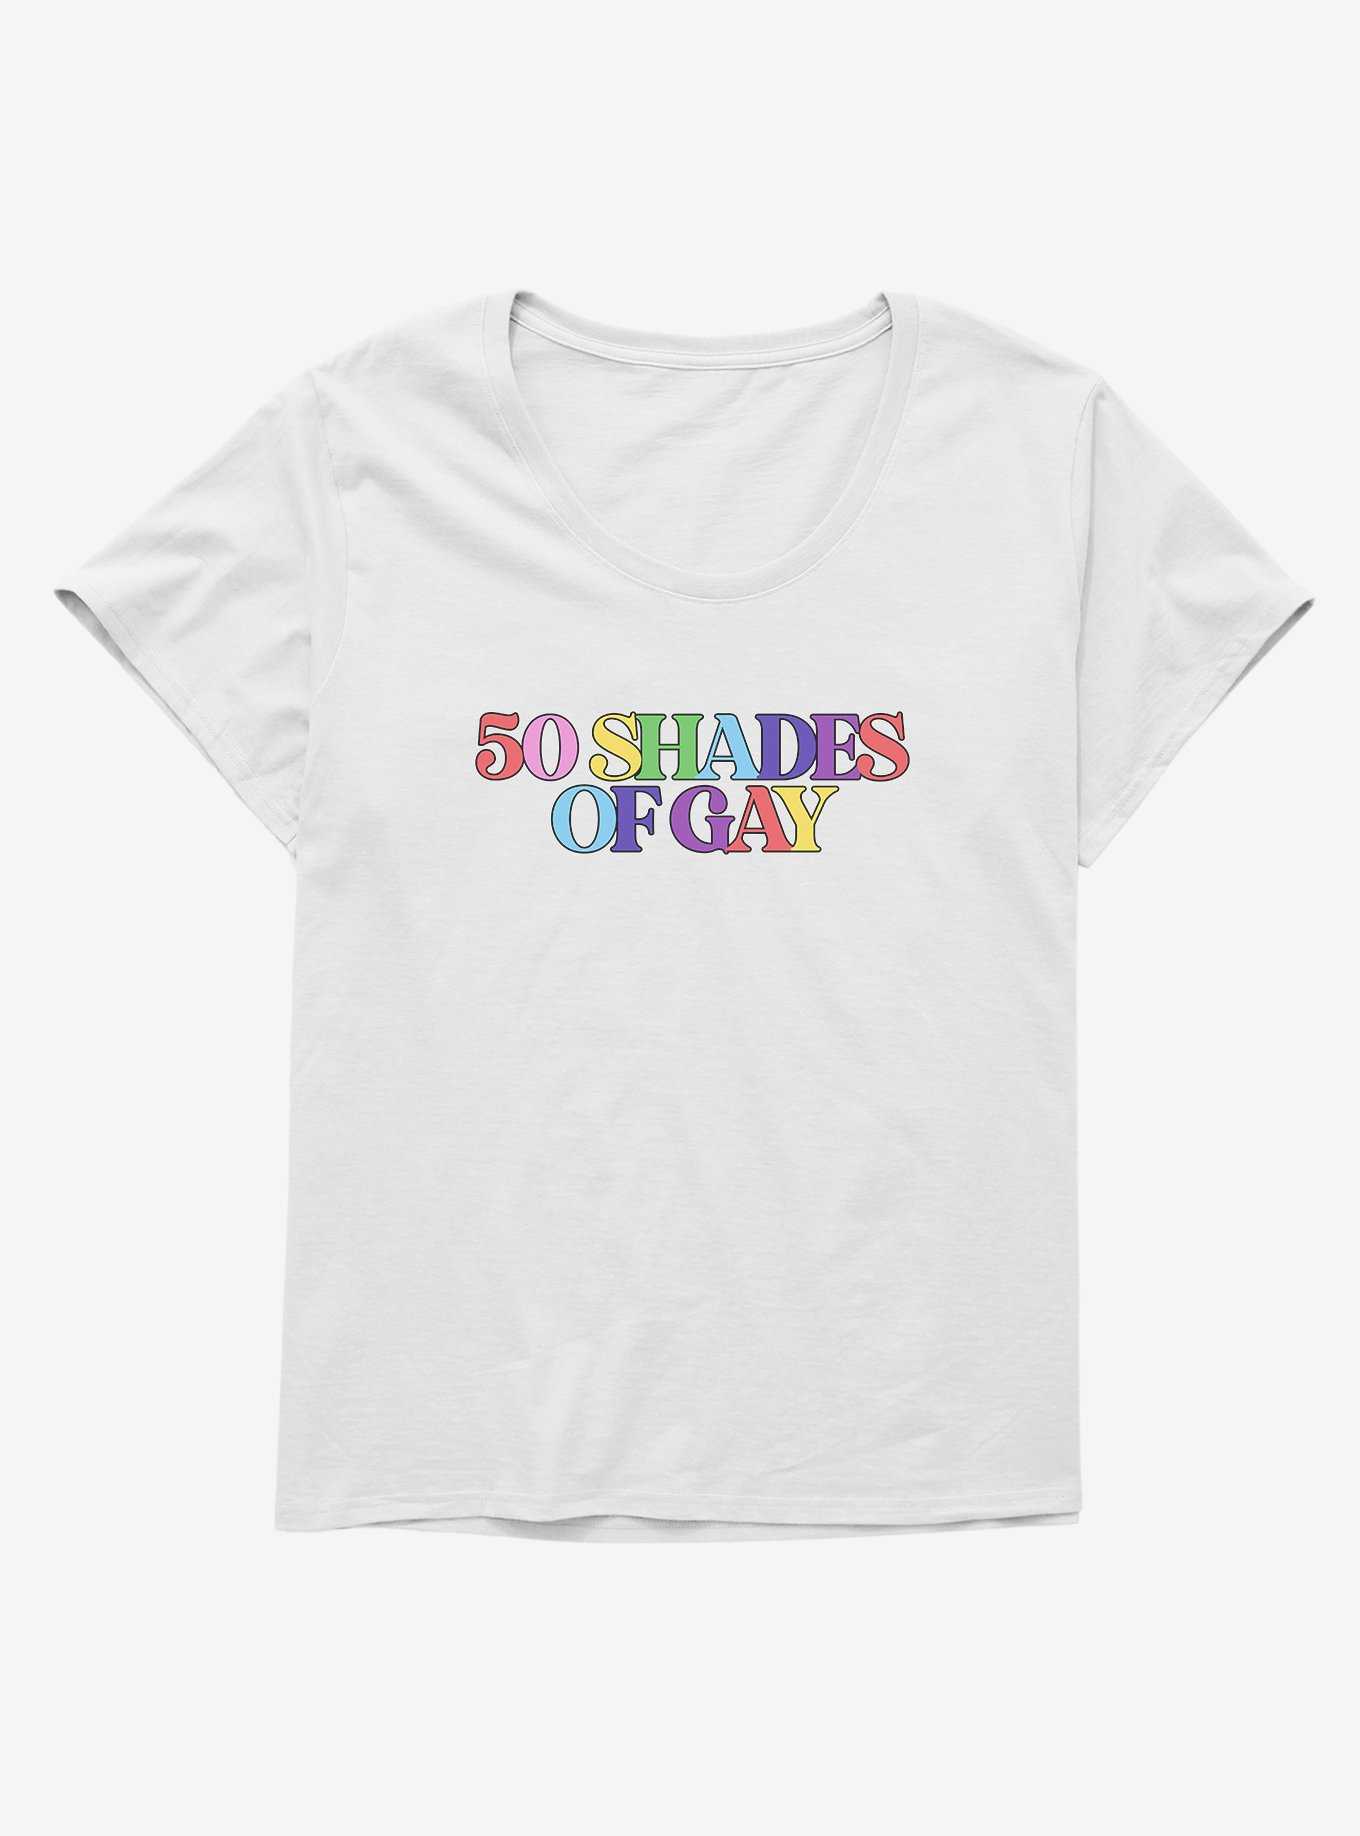 50 Shades Of Gay T-Shirt Plus Size, , hi-res